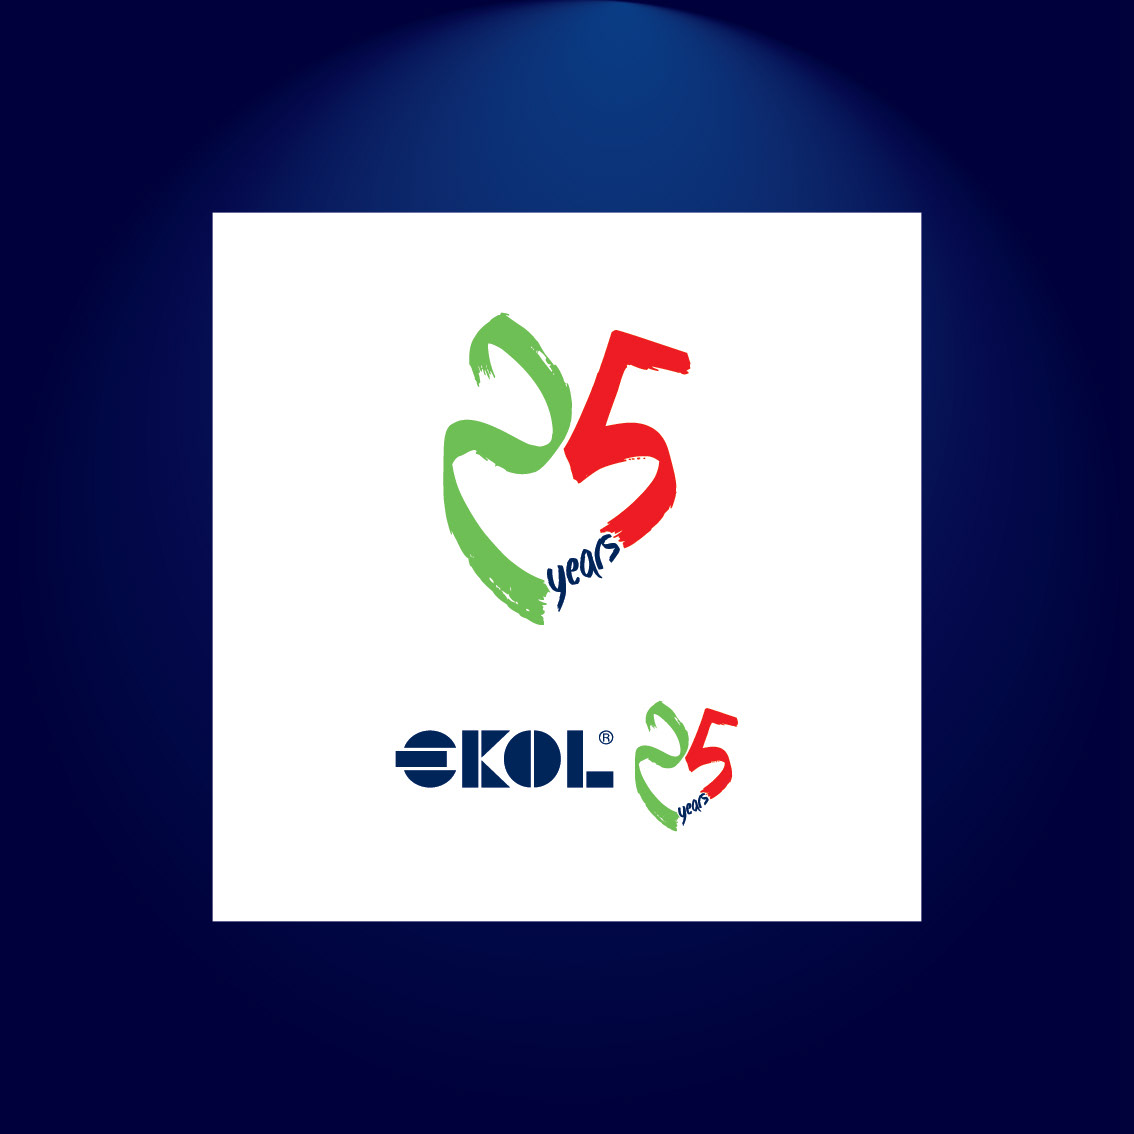 EKOL Logos